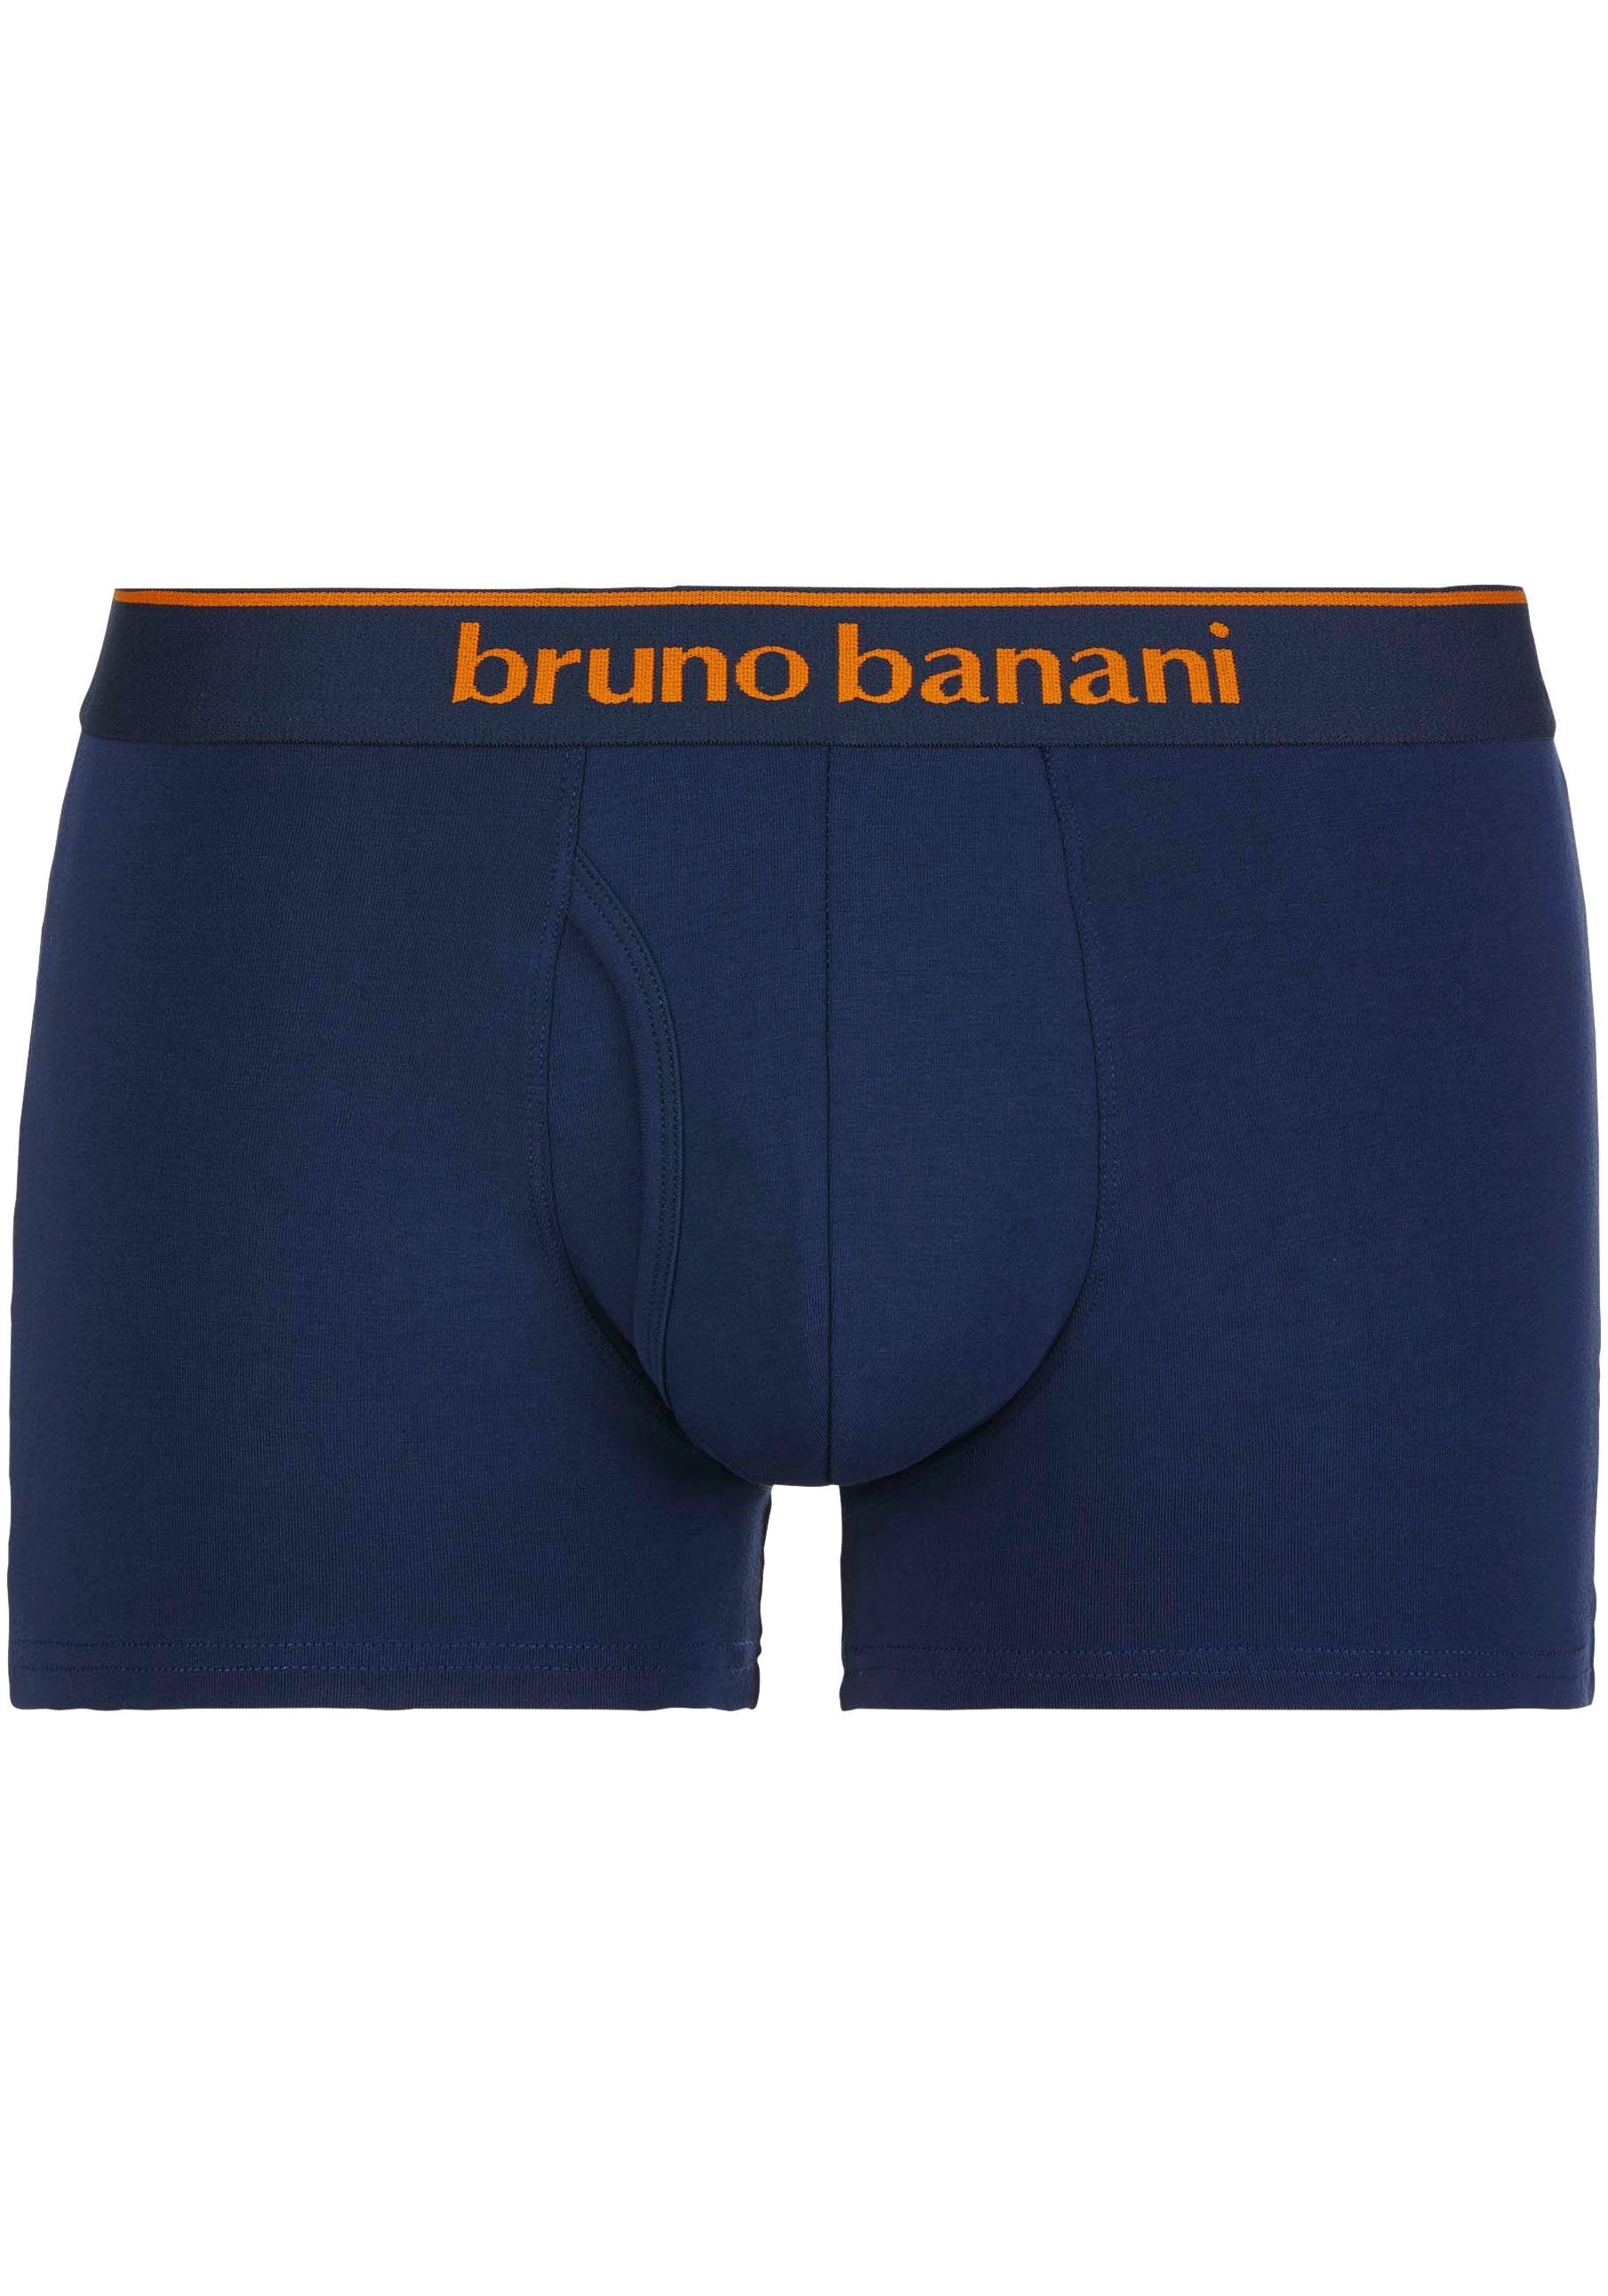 Bruno Banani Boxershorts 2-St) Kontrastfarbene Quick 2Pack Short Details (Packung, Access blau-schwarz